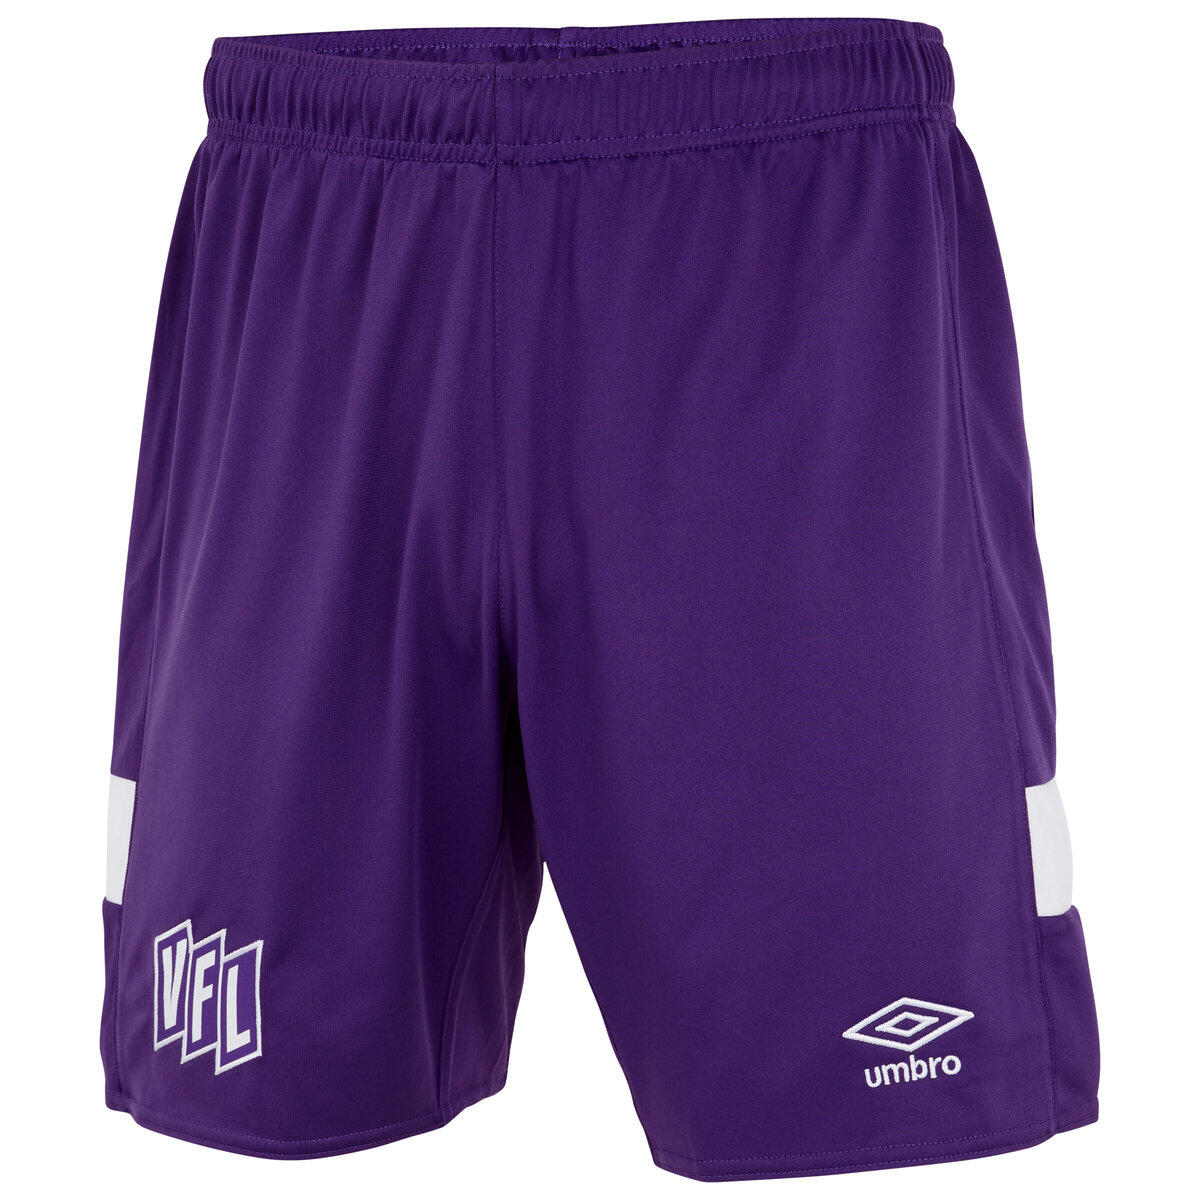 UMBRO Unisex Adult 22/23 VFL Osnabruck Away Shorts (Purple)